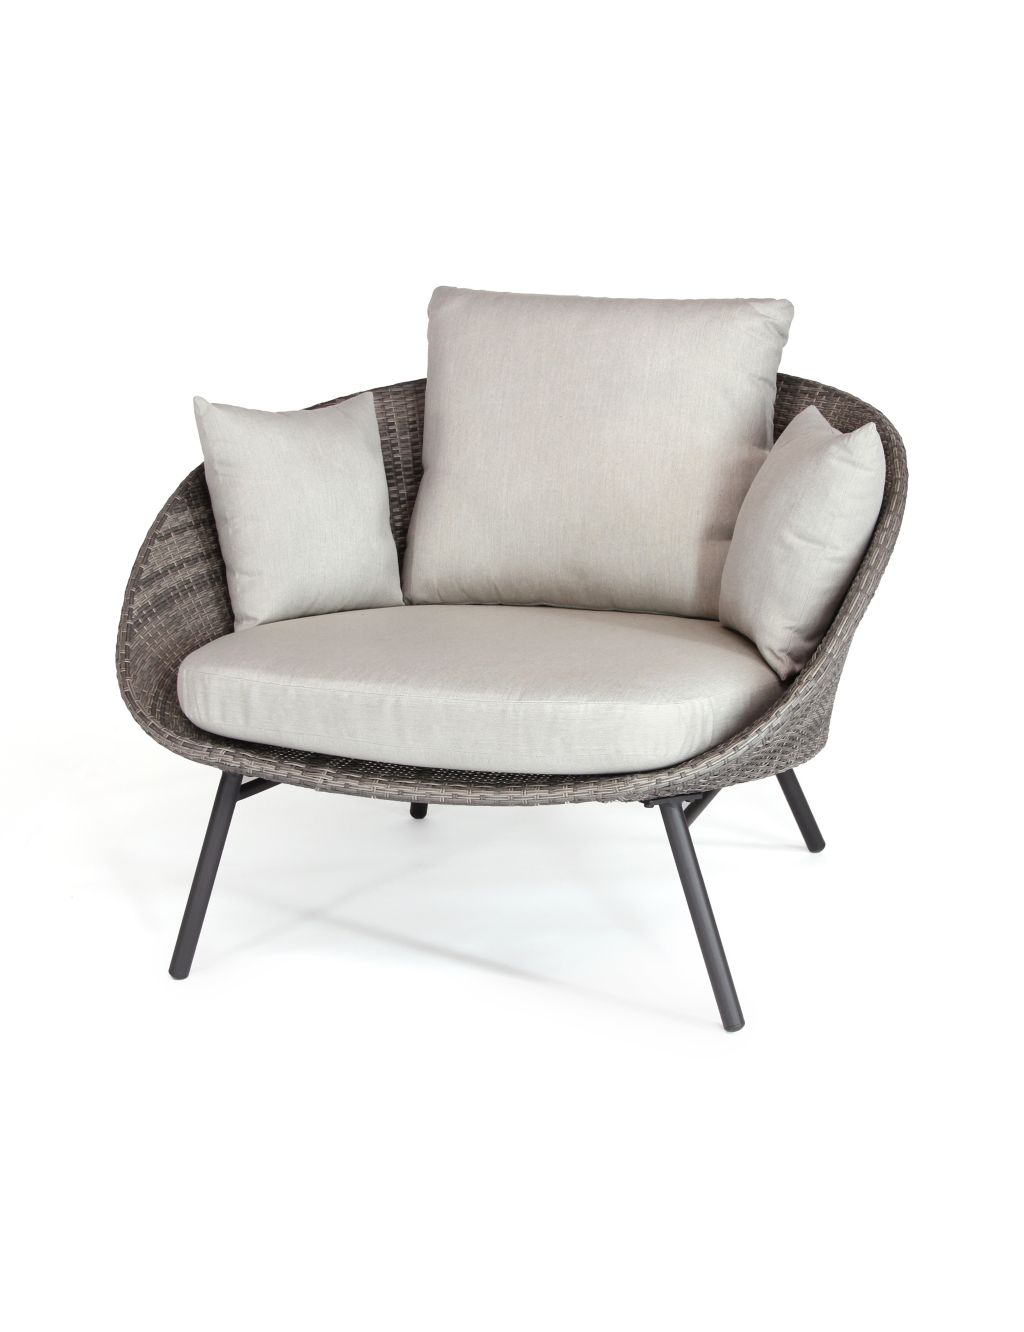 LaMode Garden Comfort Chair image 2